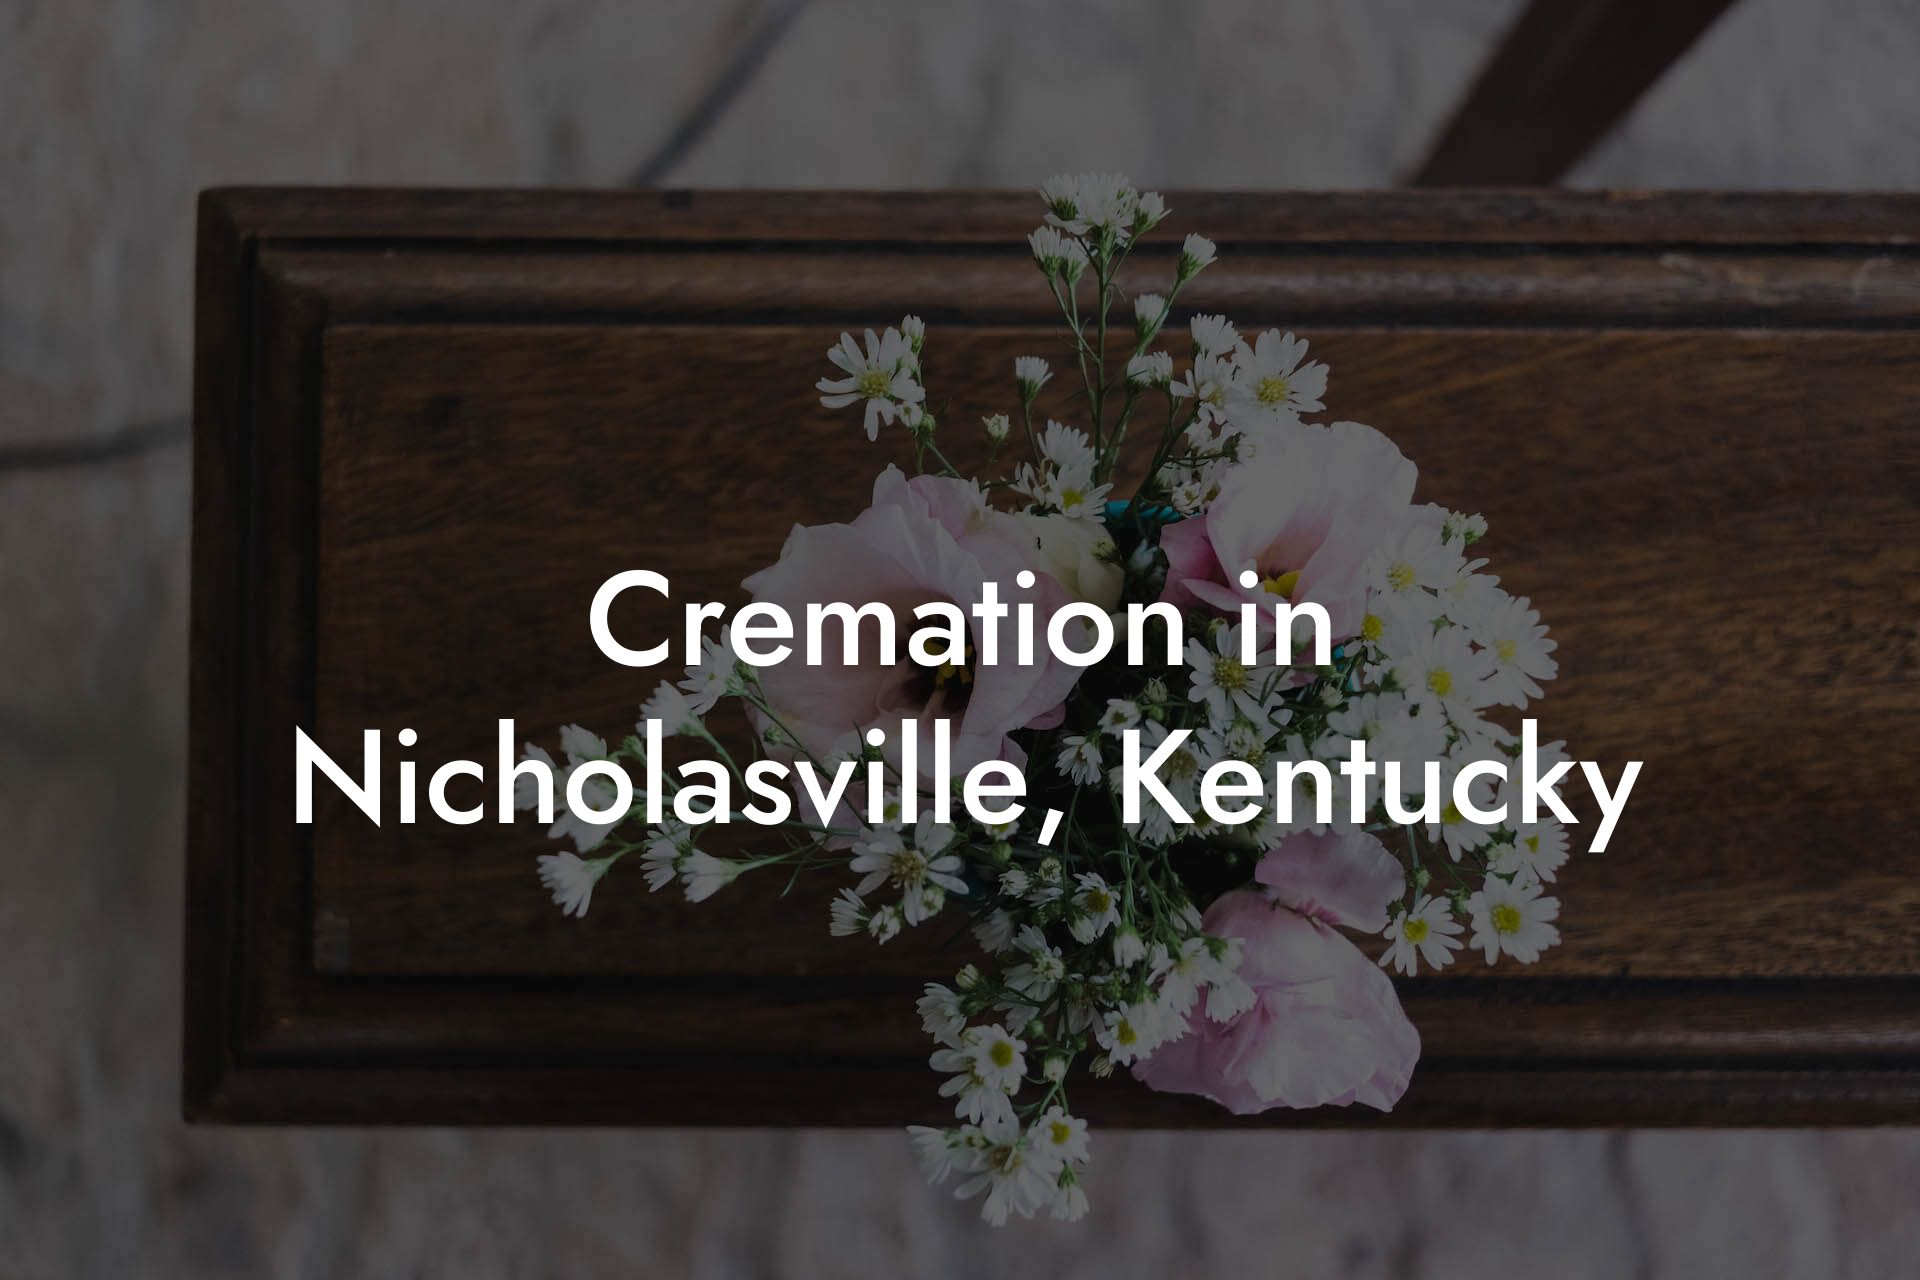 Cremation in Nicholasville, Kentucky